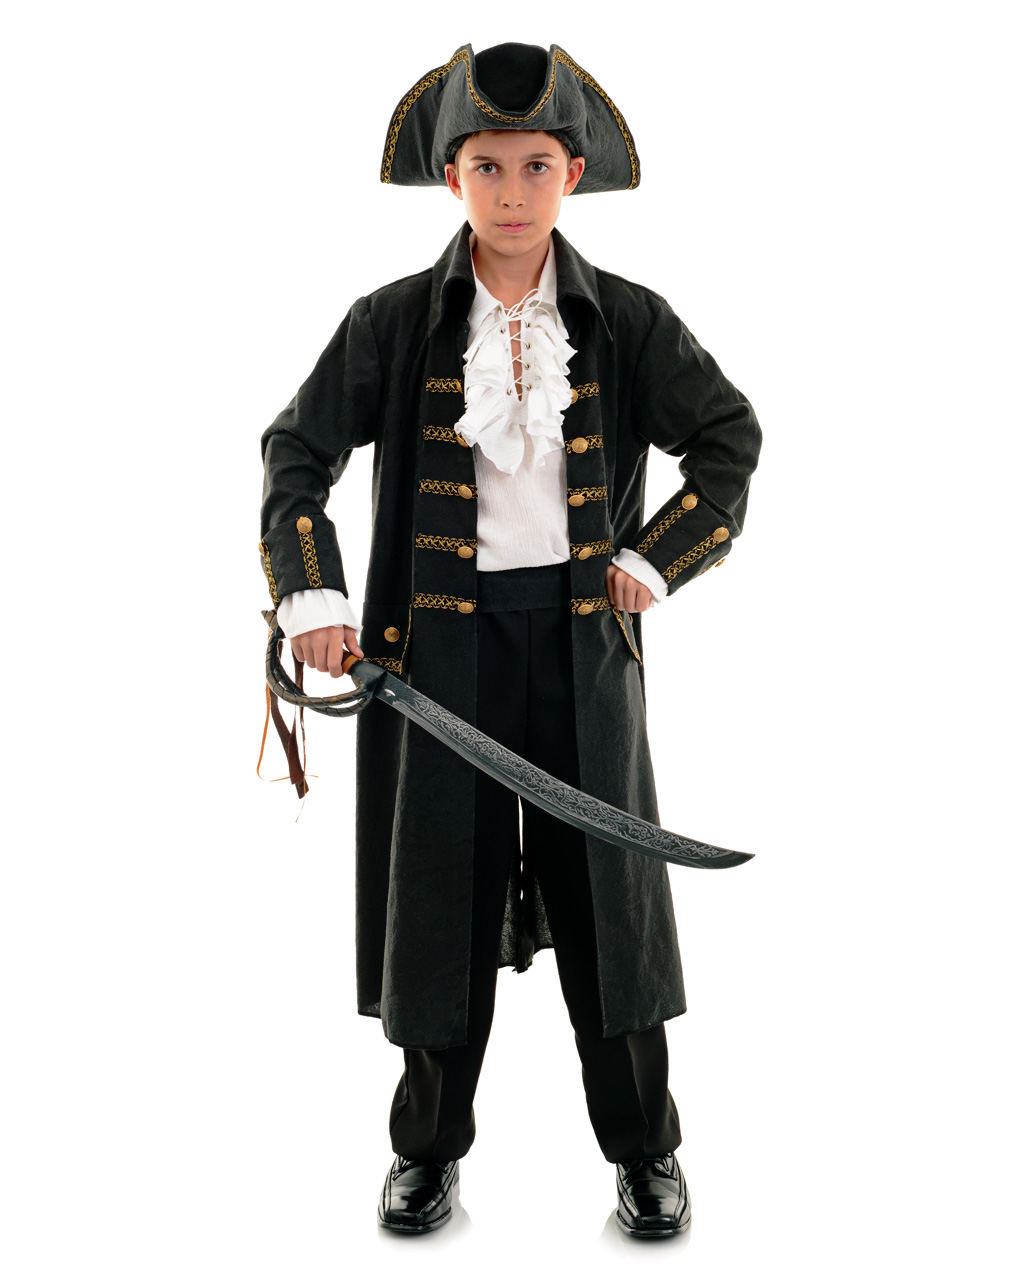 Rub Piraten-Cape Kinder Kostüm Pirat zu Karneval Fasching 